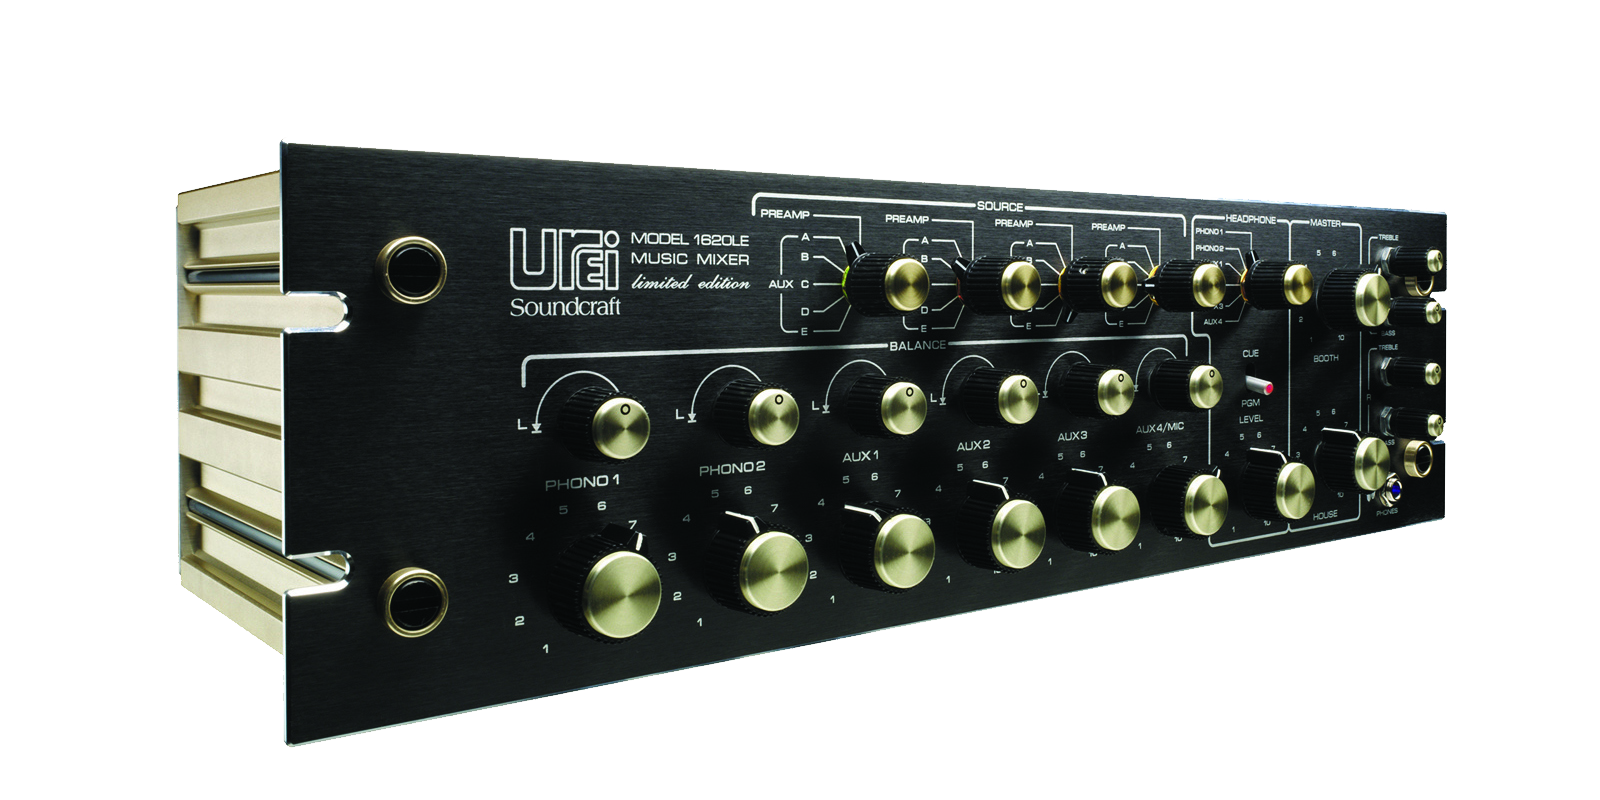 UREI 1620LE | Soundcraft - Professional Audio Mixers | English